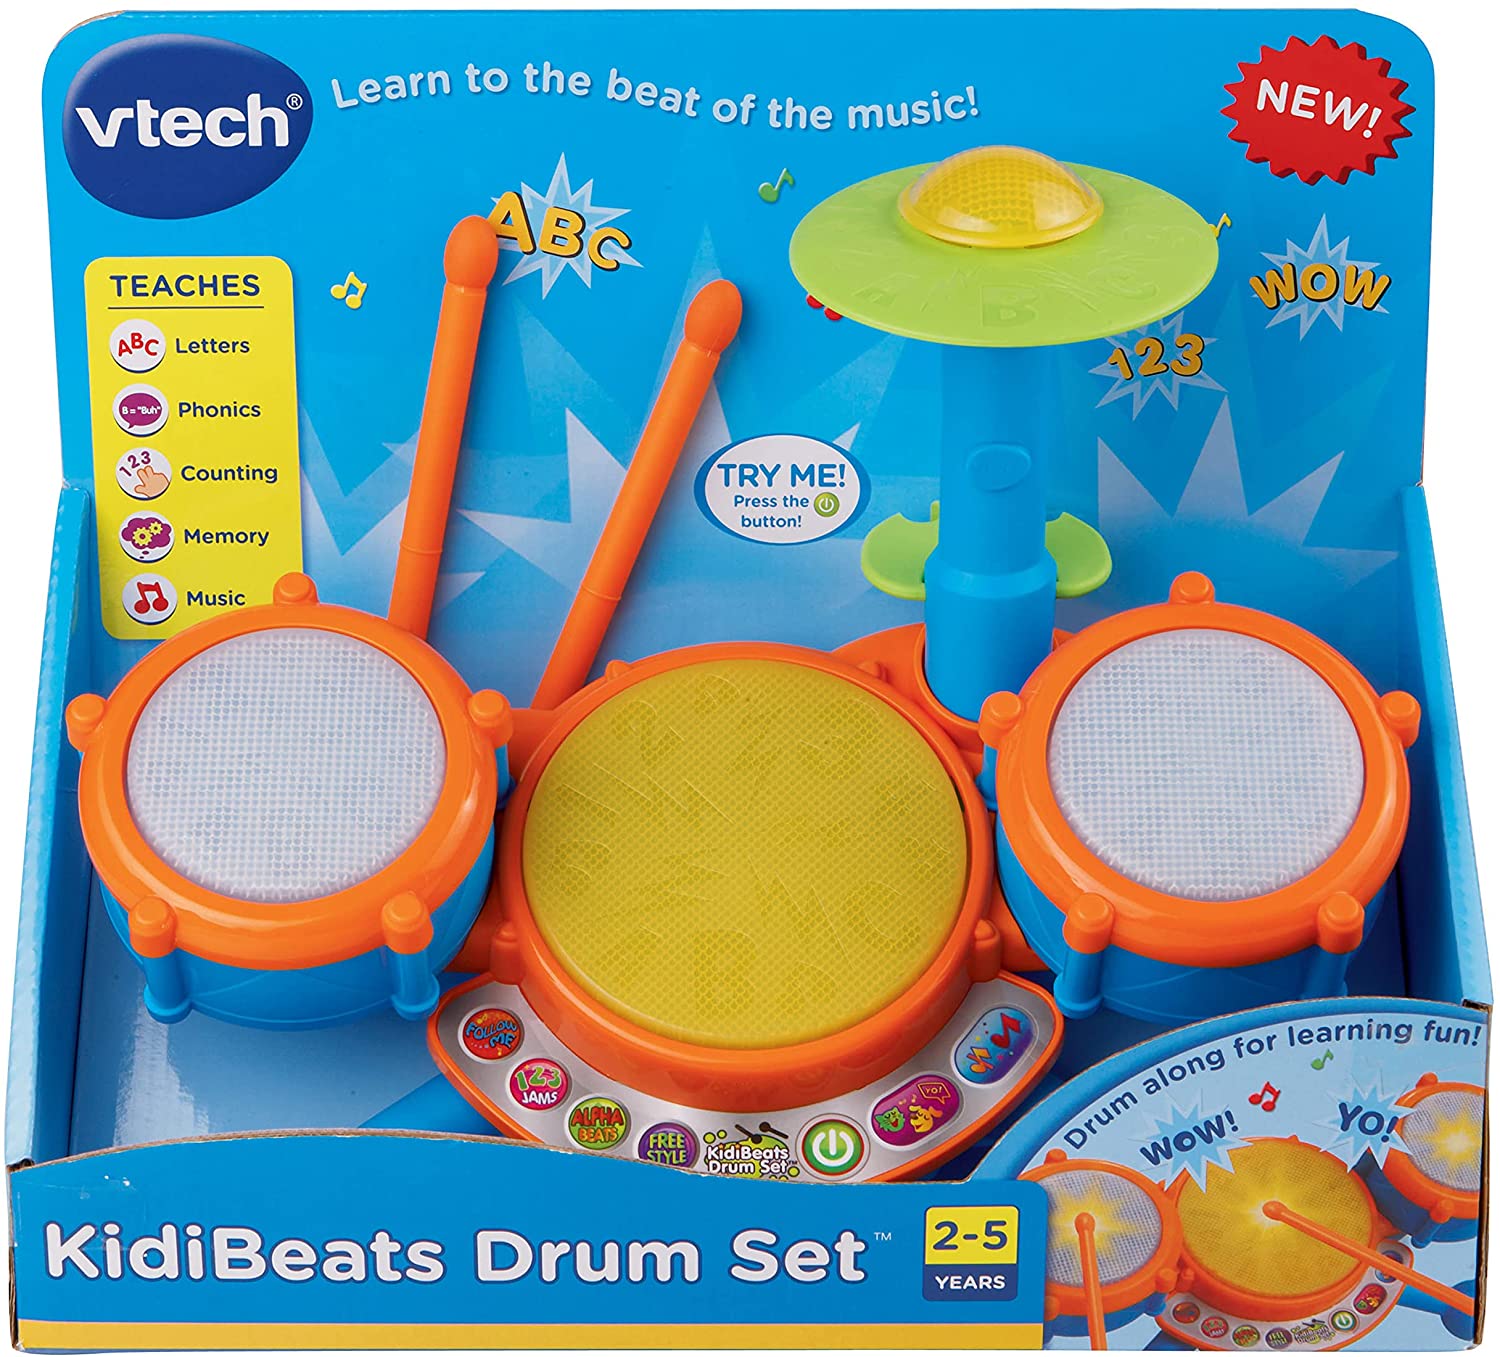 VTech KidiBeats Kids Drum Set, Orange - Educational Toy